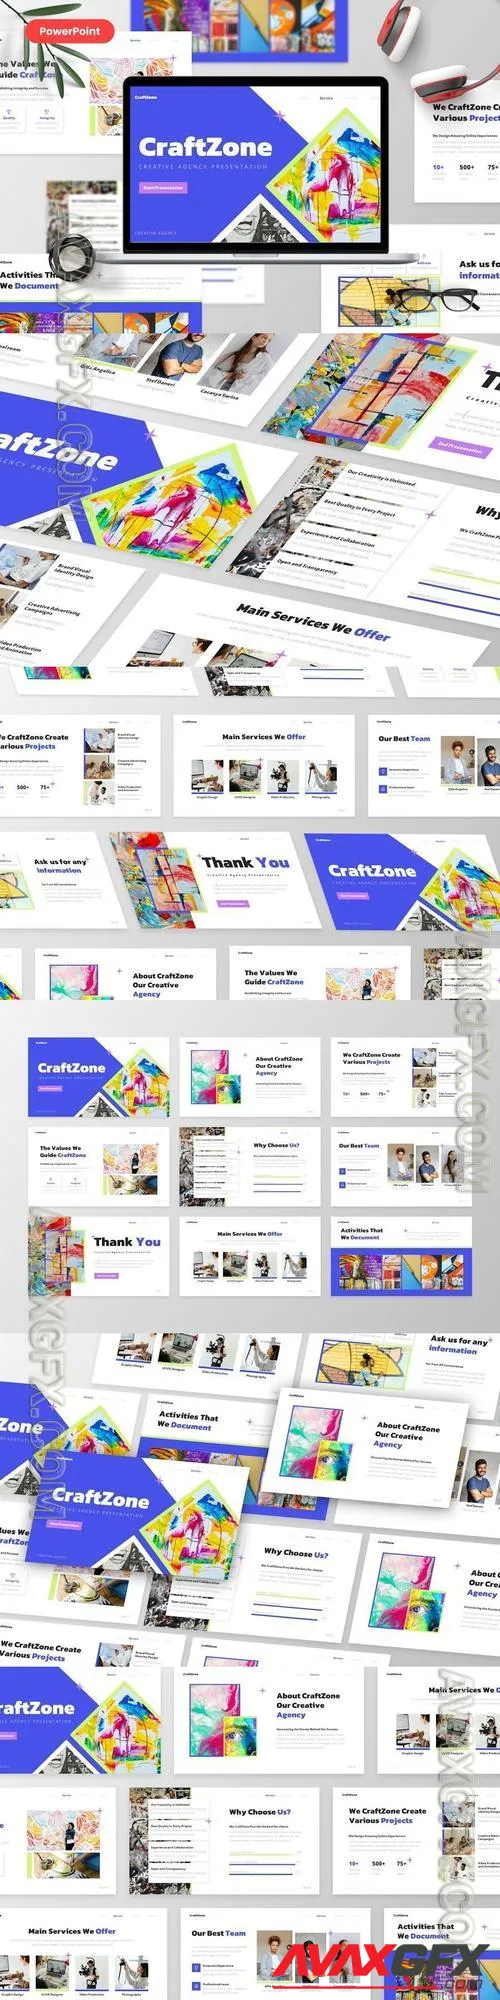 CraftZone - Creative Agency PowerPoint Template